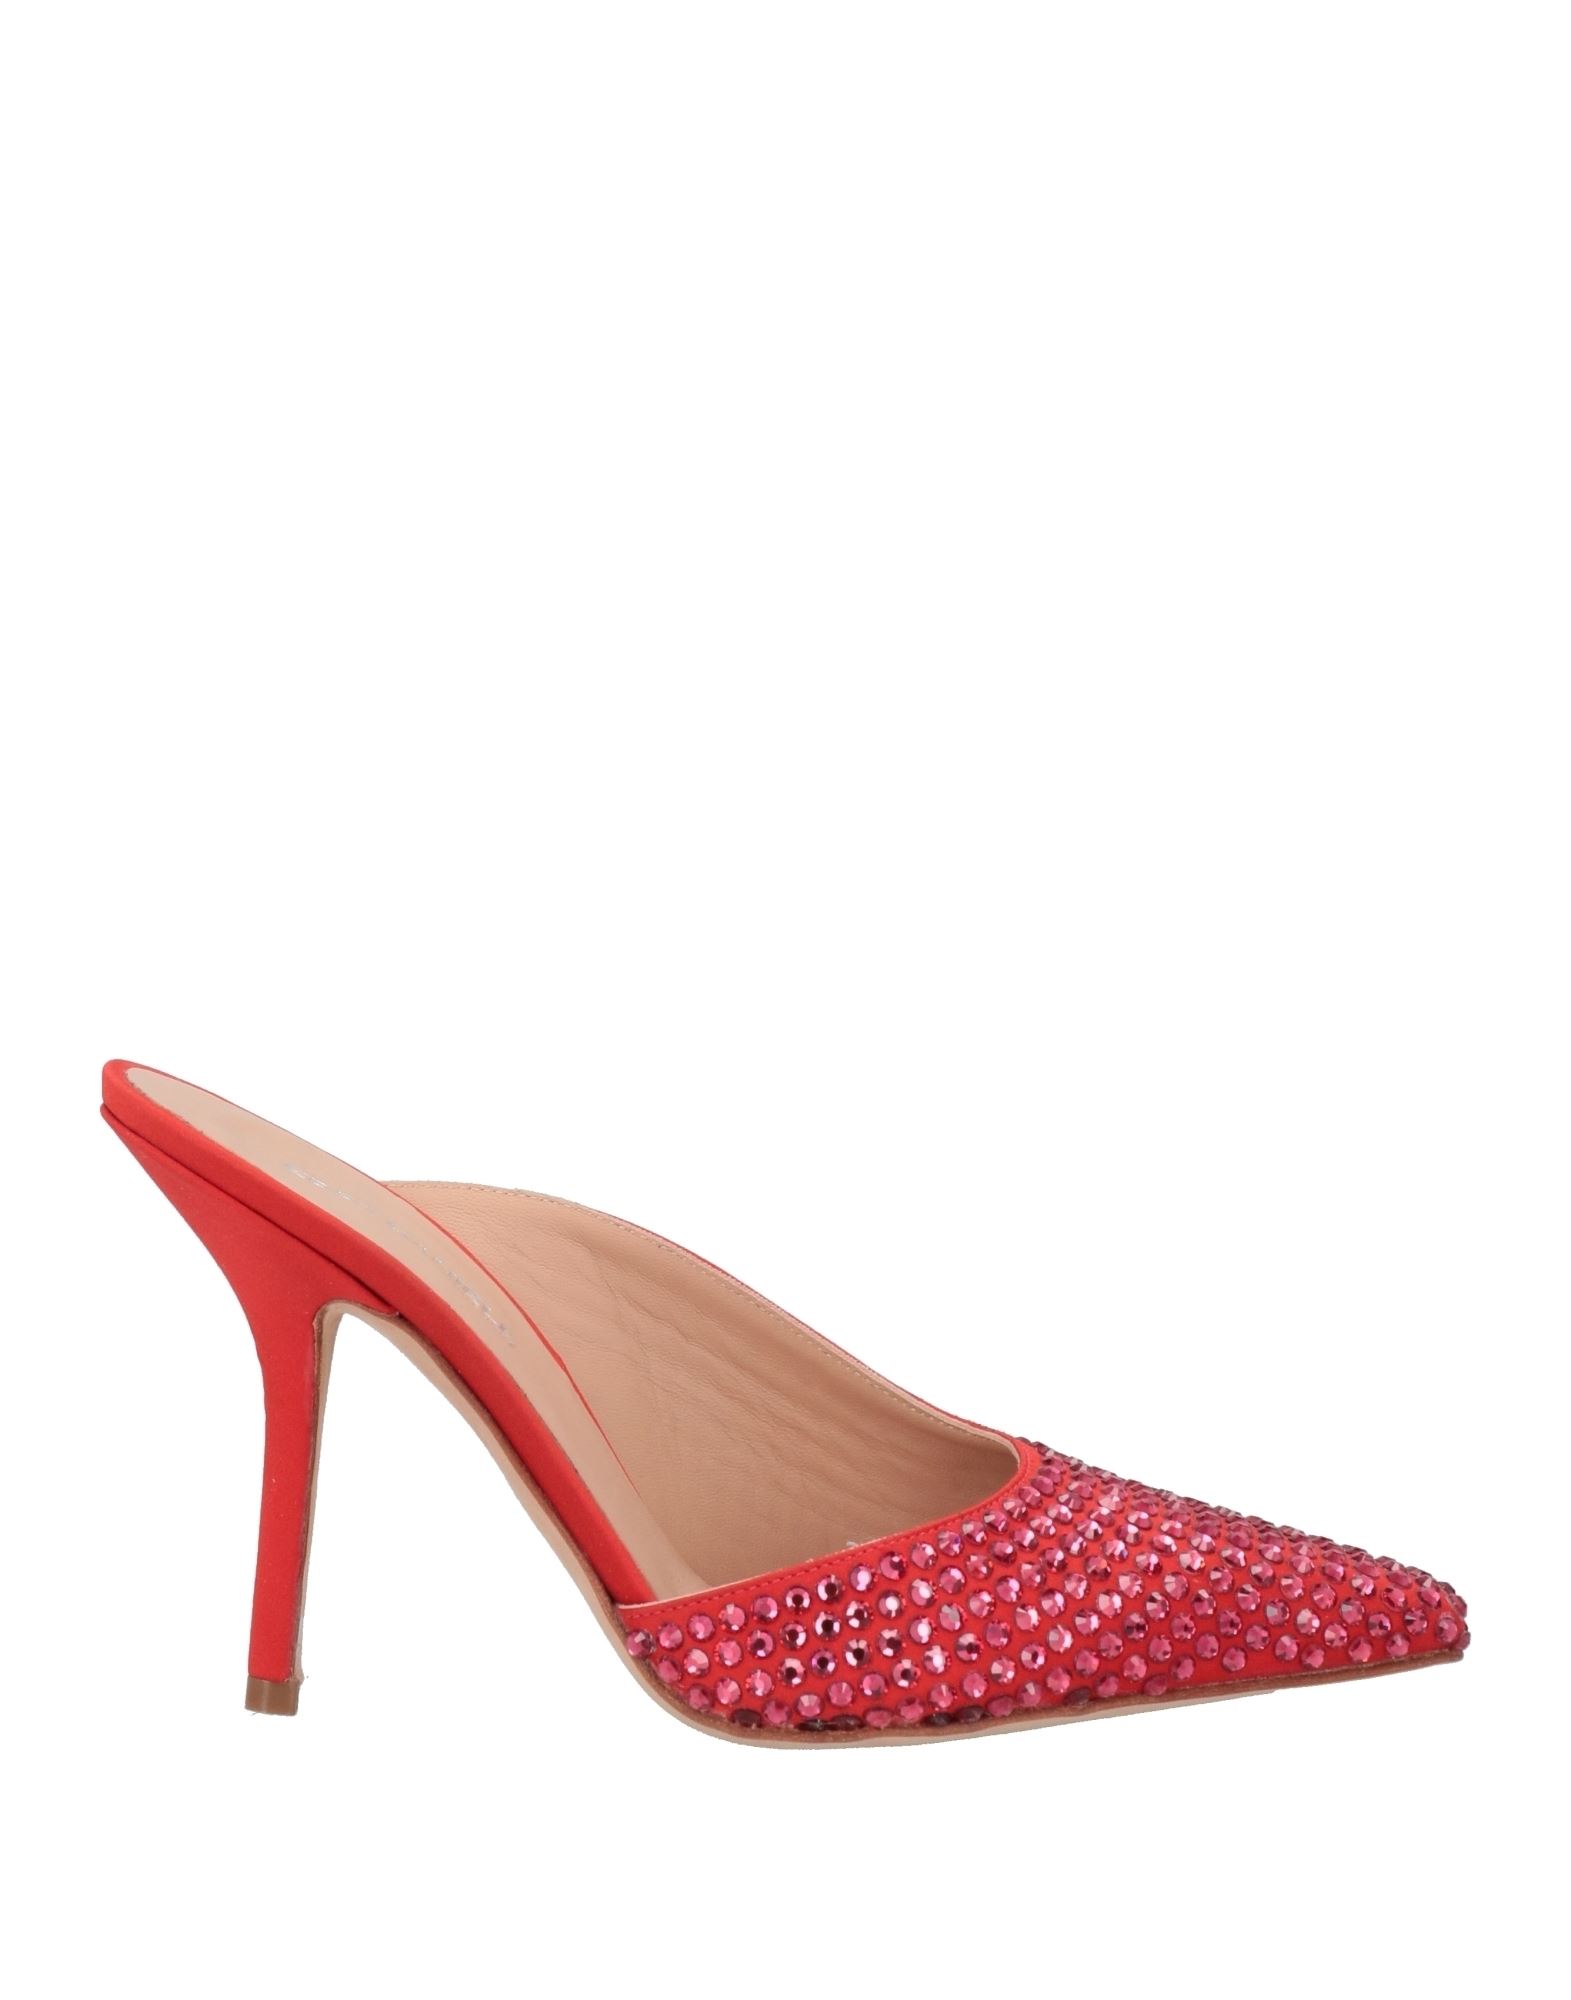 Eddy Daniele Woman Mules & Clogs Red Size 8.5 Textile Fibers